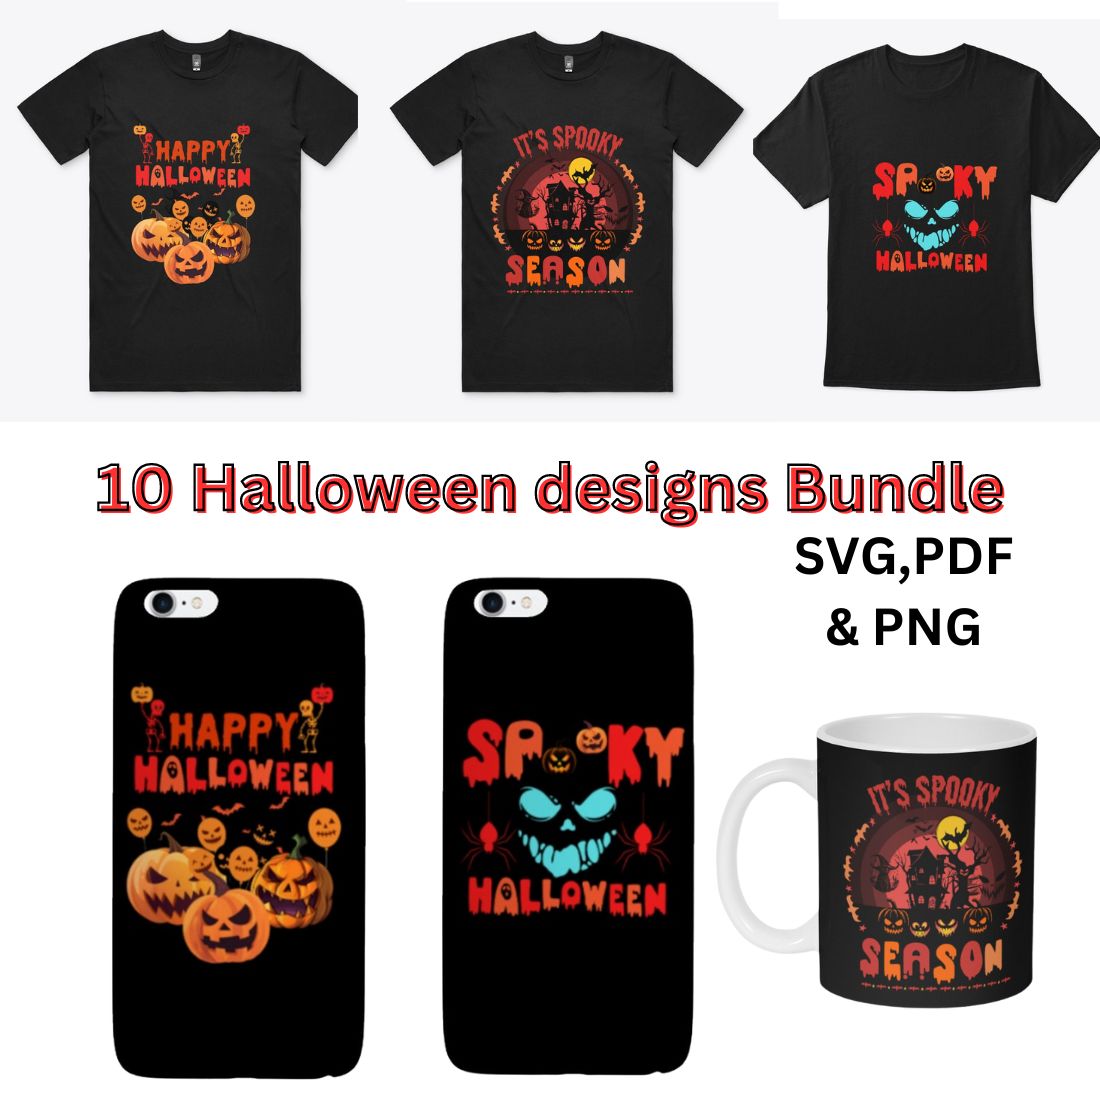 Spooky Halloween Designs Bundle preview image.